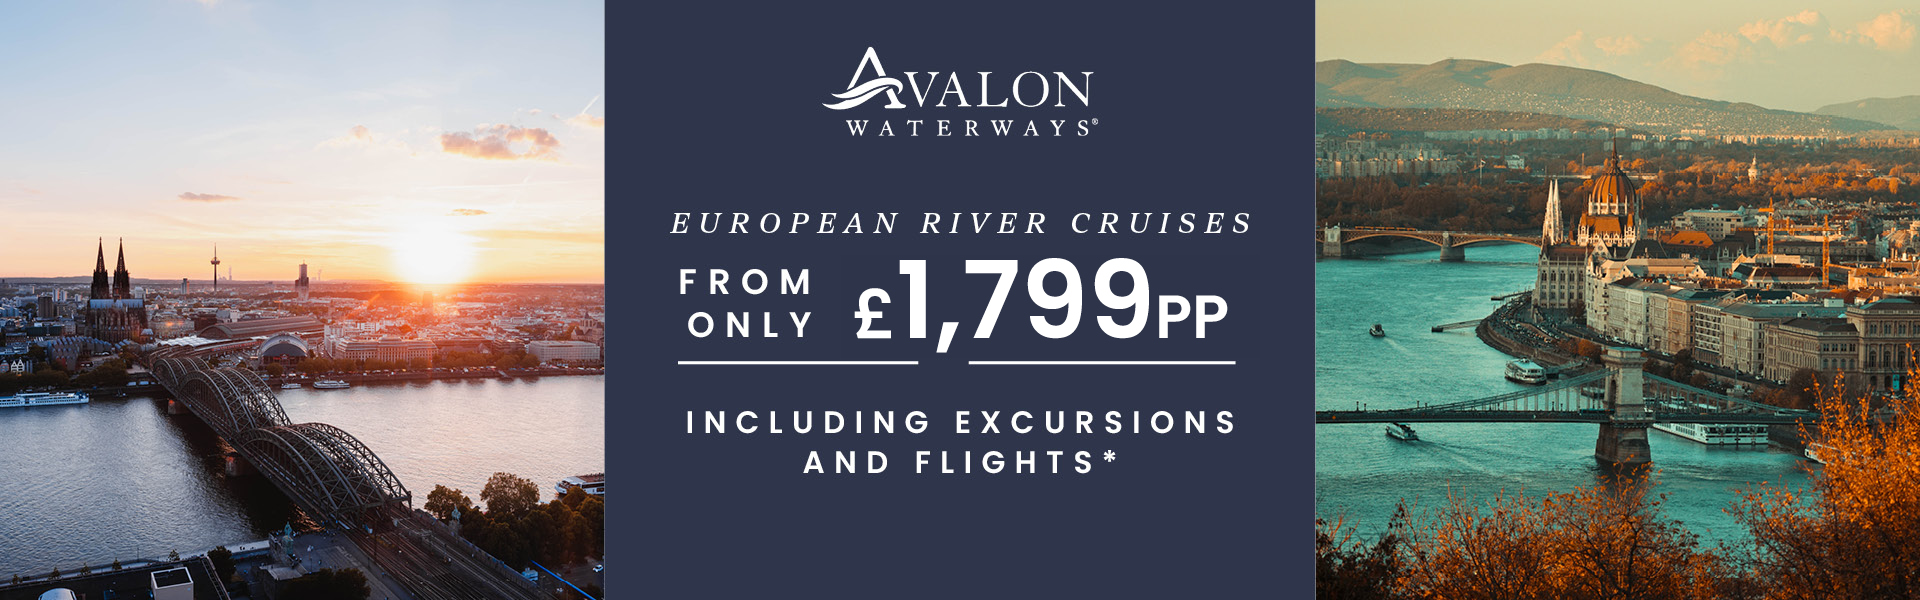 Avalon Waterways Cruises - European River Cruises from £1,799pp